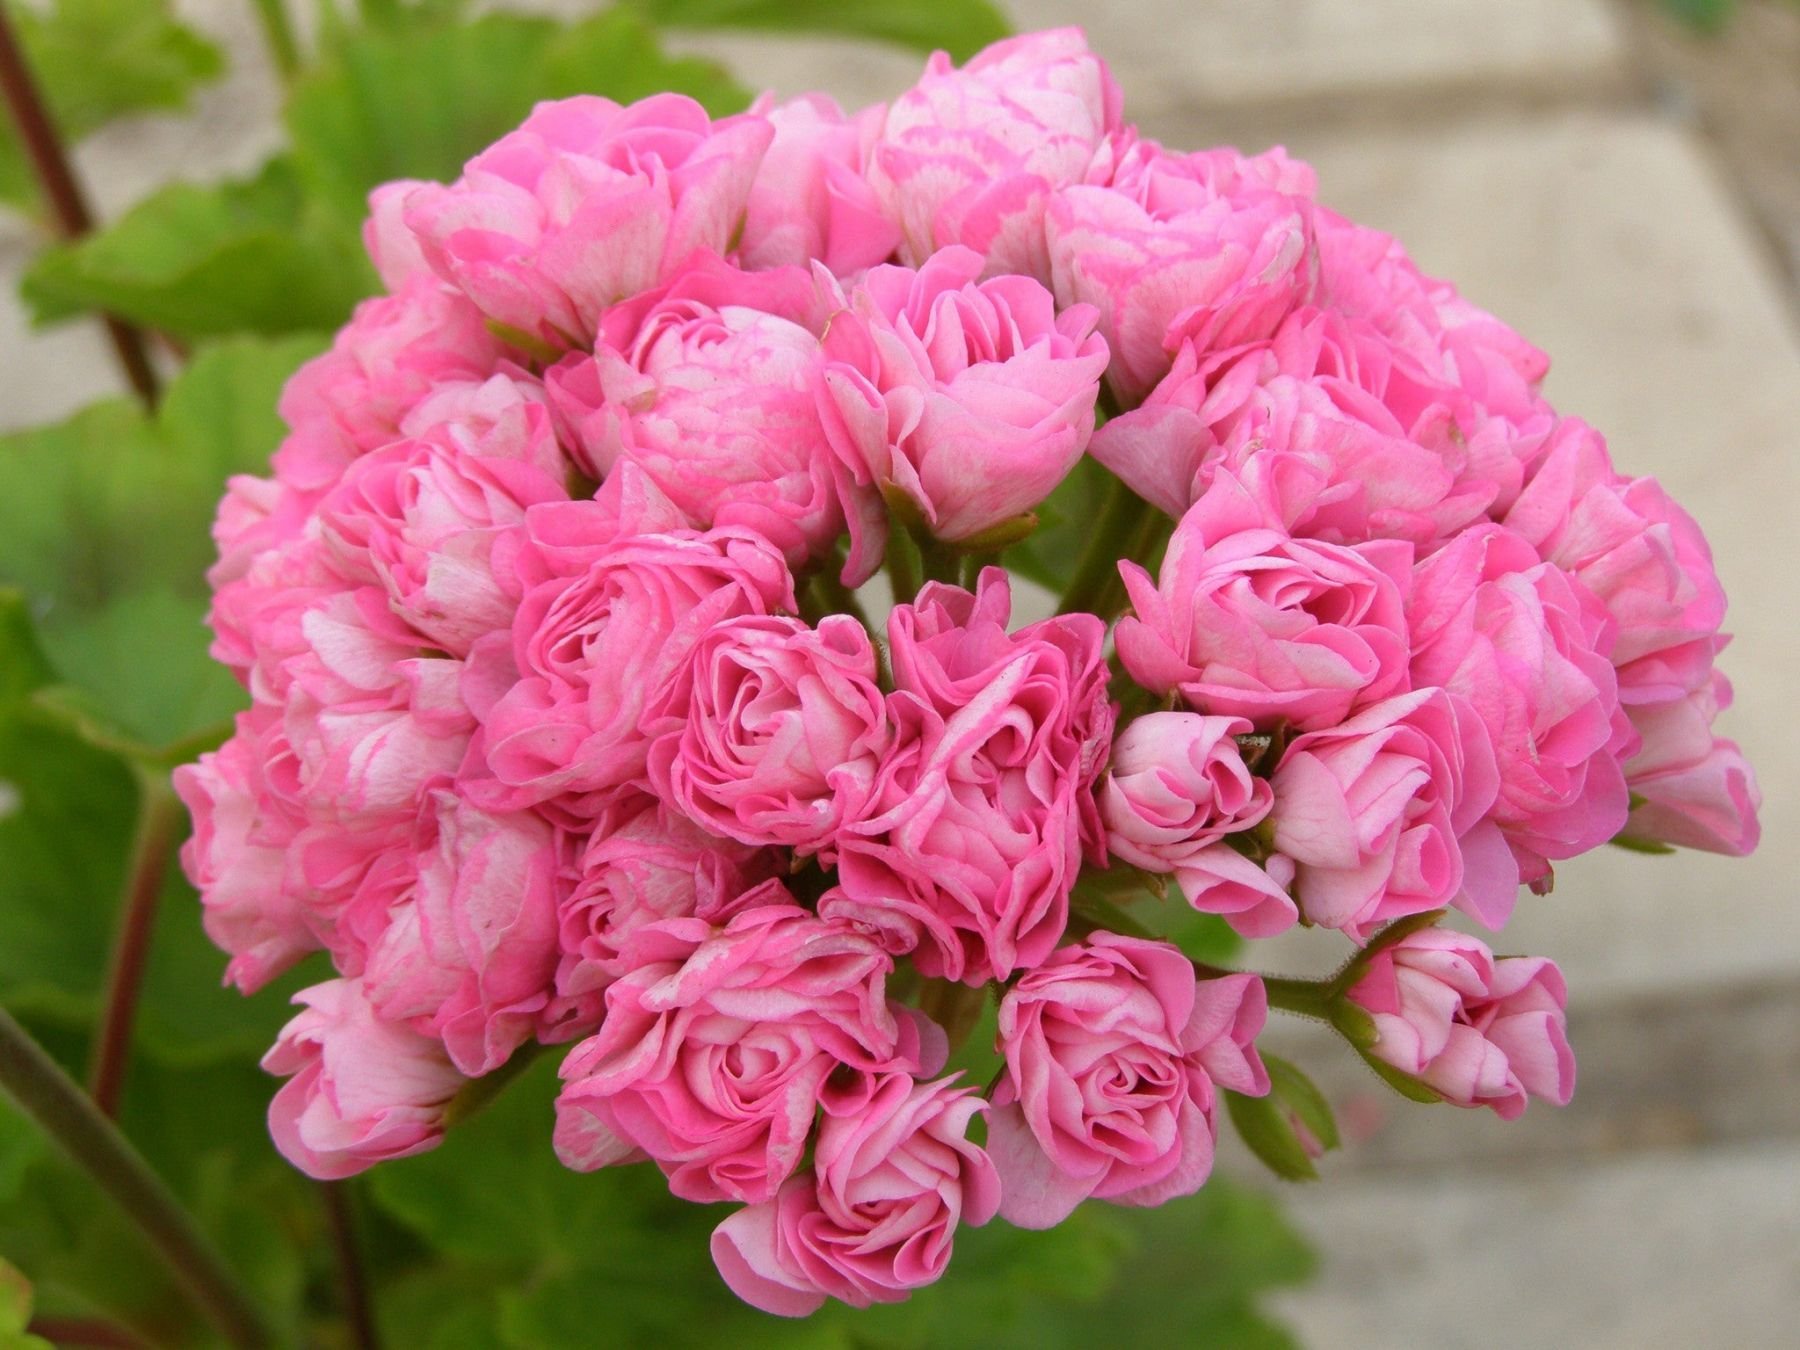 Пеларгония Swanland Pink. Australian Pink Rosebud пеларгония. Пеларгония Swanland Pink Australien Pink Rosebud.